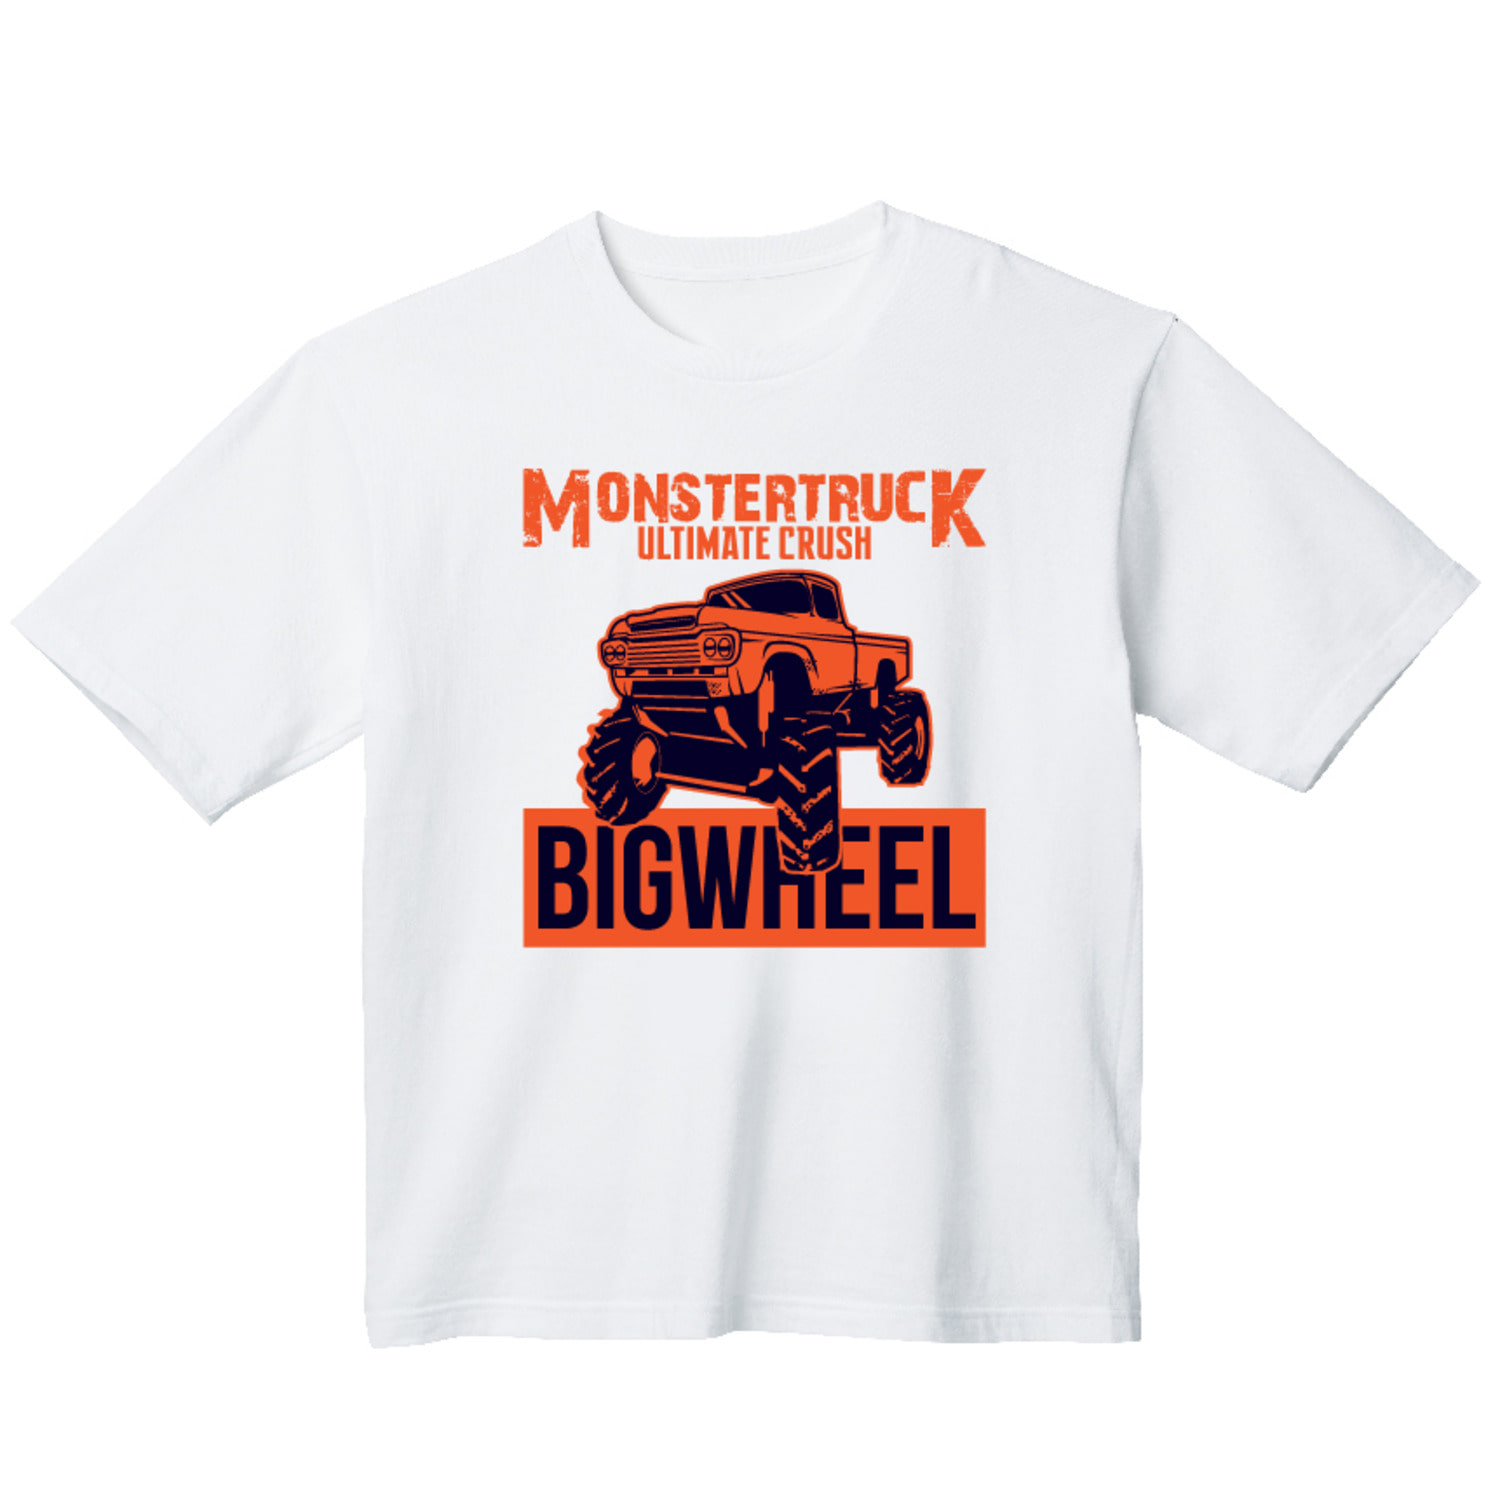 BIGWREEL 빈티지 그래픽 오버핏 티셔츠 car.08